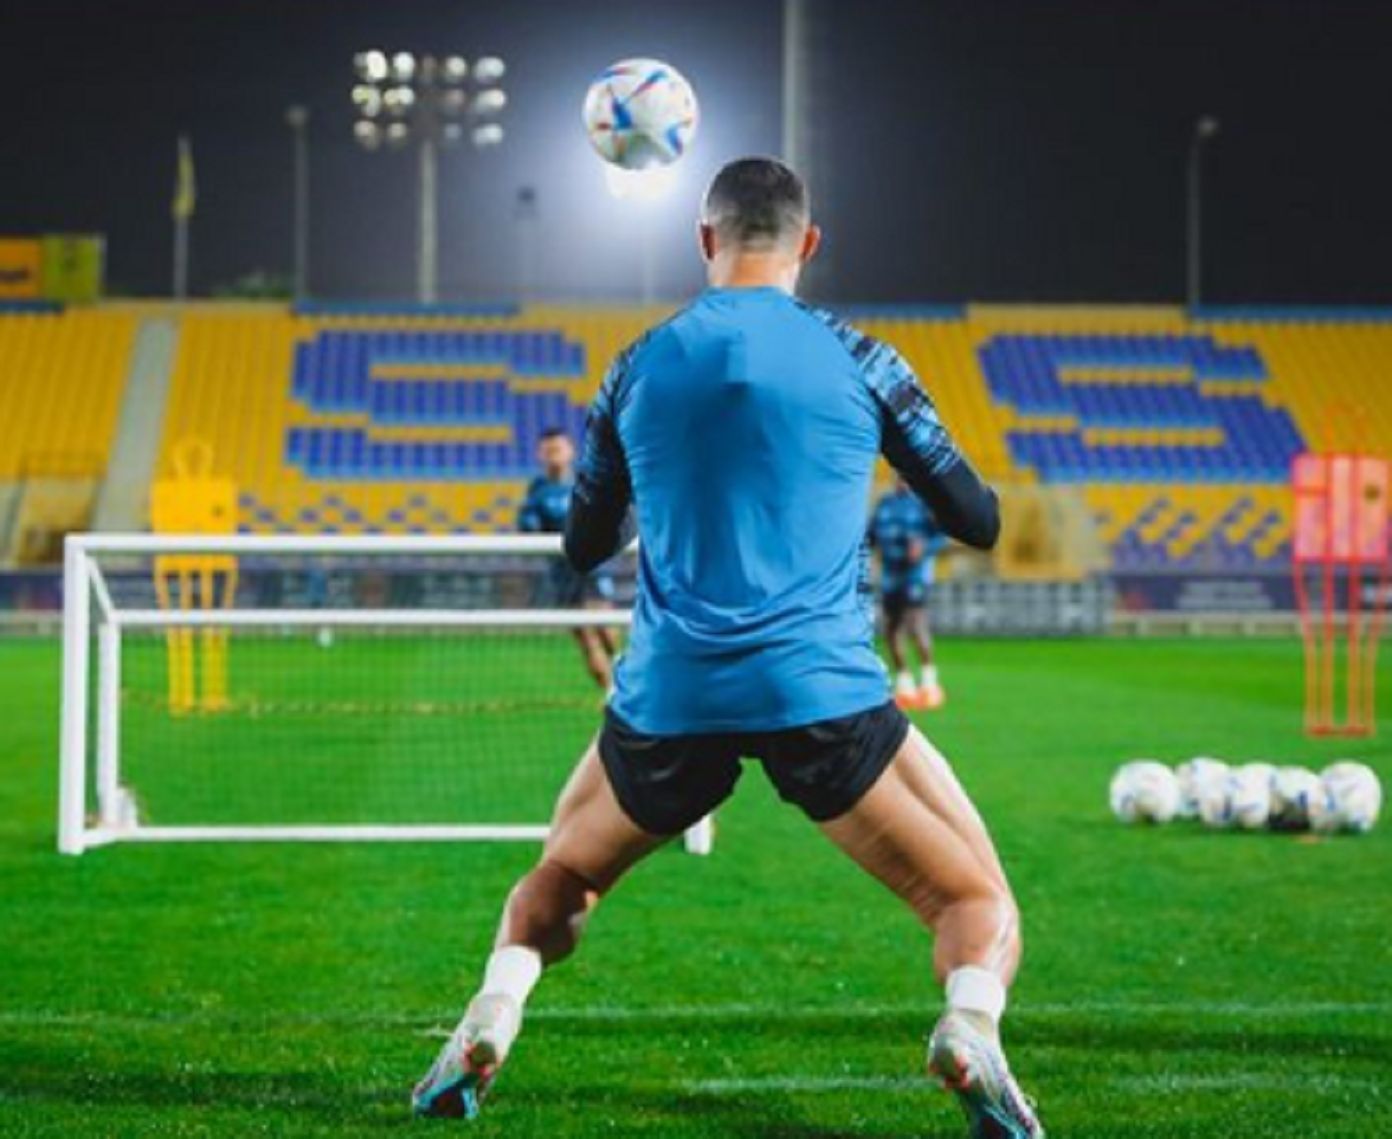 Cristiano Ronaldo trains his legs (via TalkSport)